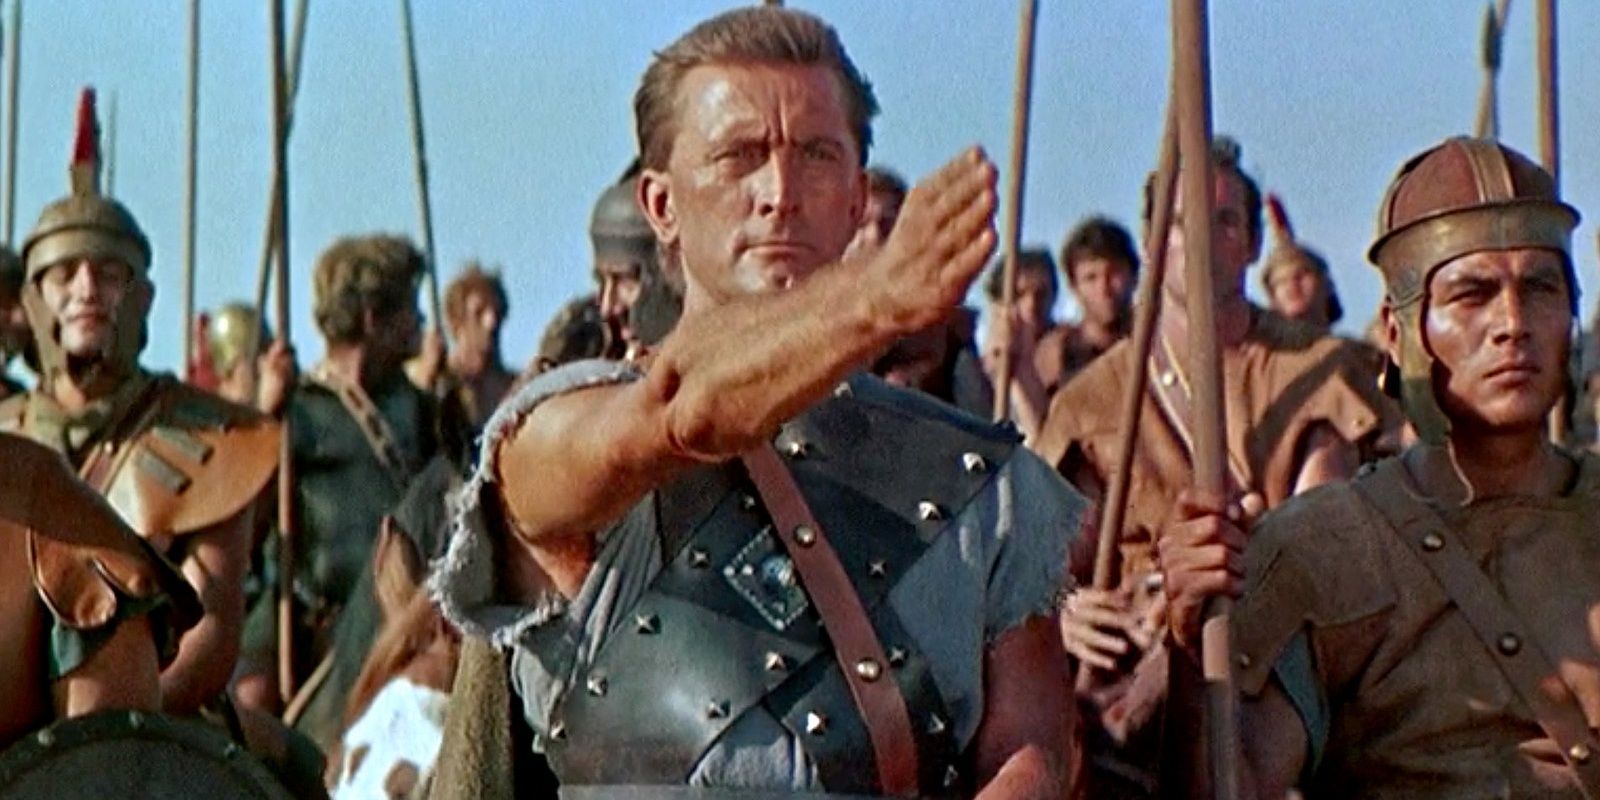 Kirk Douglas as Spartacus, leaving the rebellion army